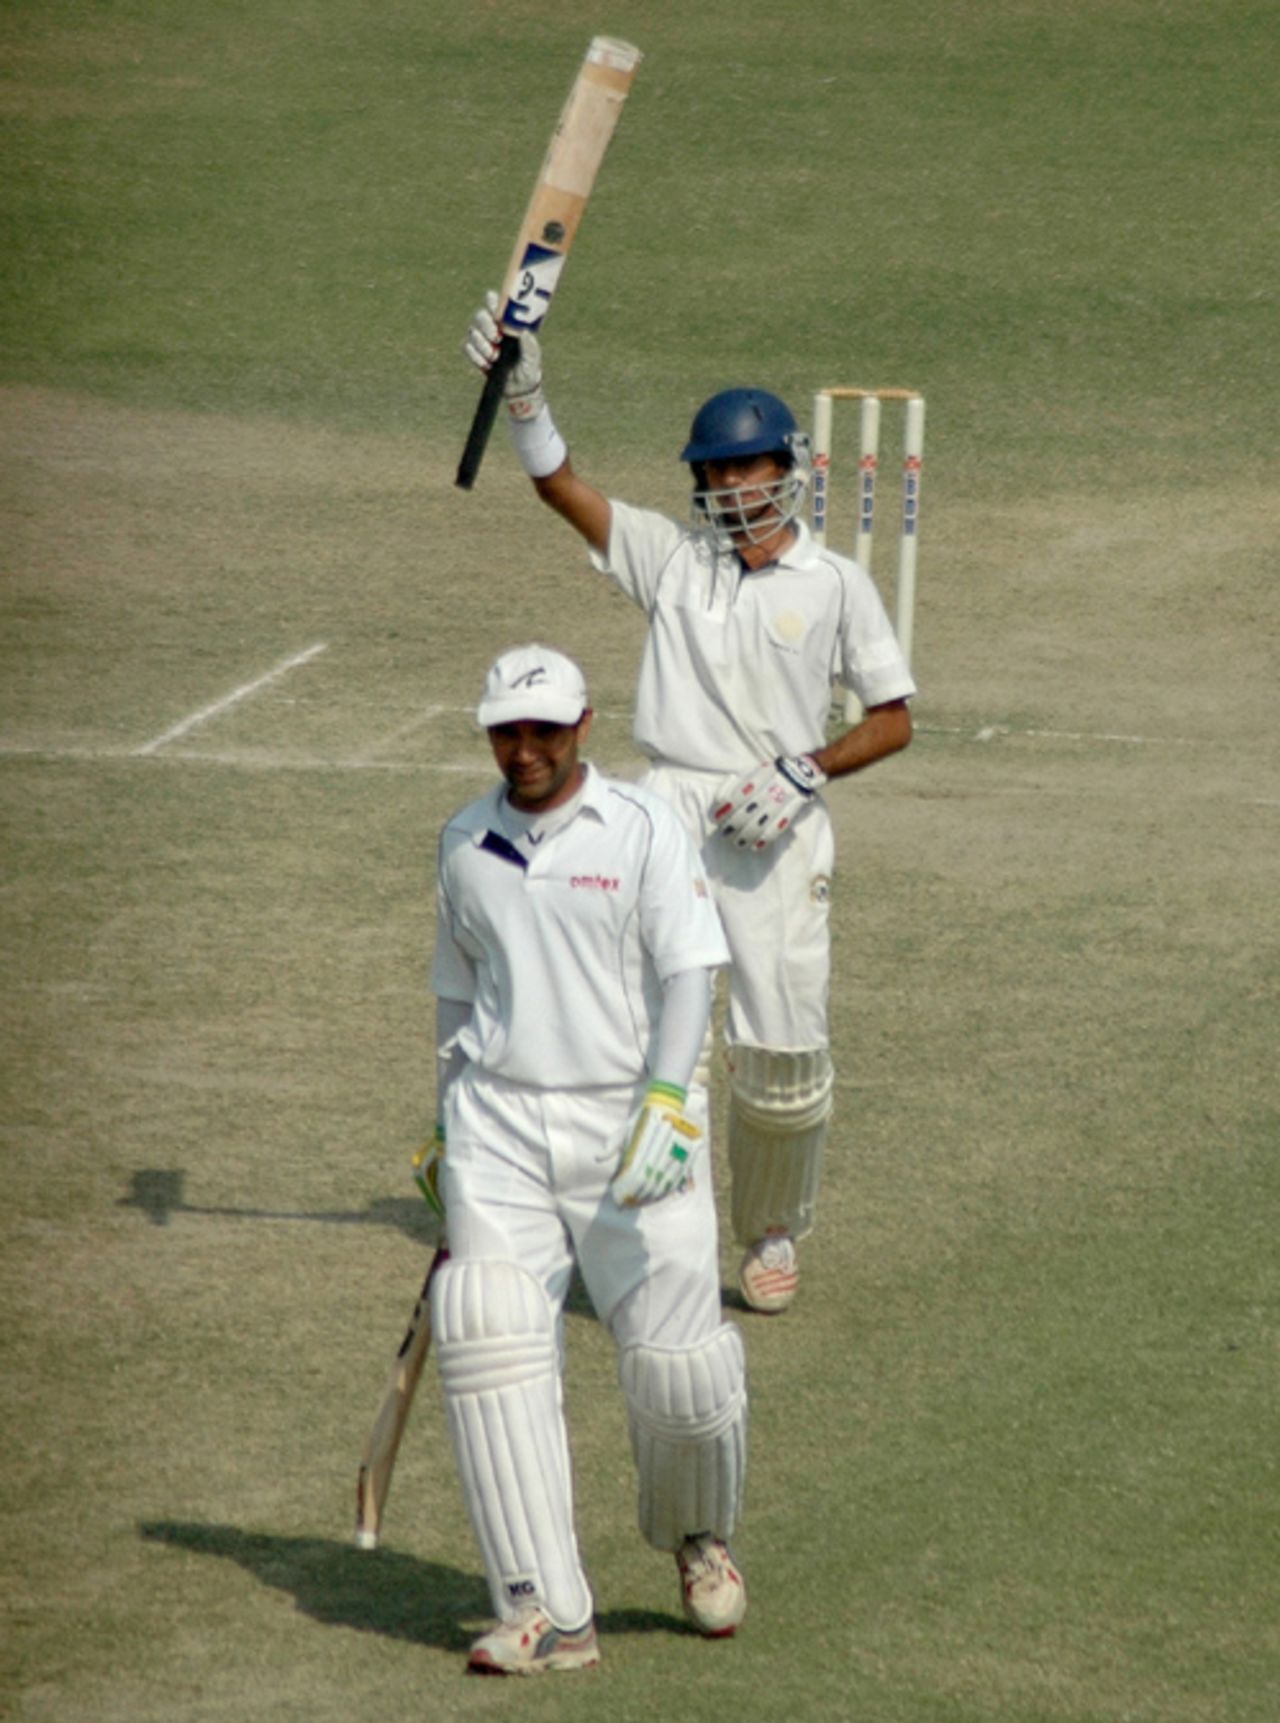 Uday Kaul raises his bat upon reaching his century while Pankaj Dharmani looks on, Punjab v Andhra, Ranji Trophy Super League, Group B, 1st round, 3rd day, Amritsar, November 5, 2007 